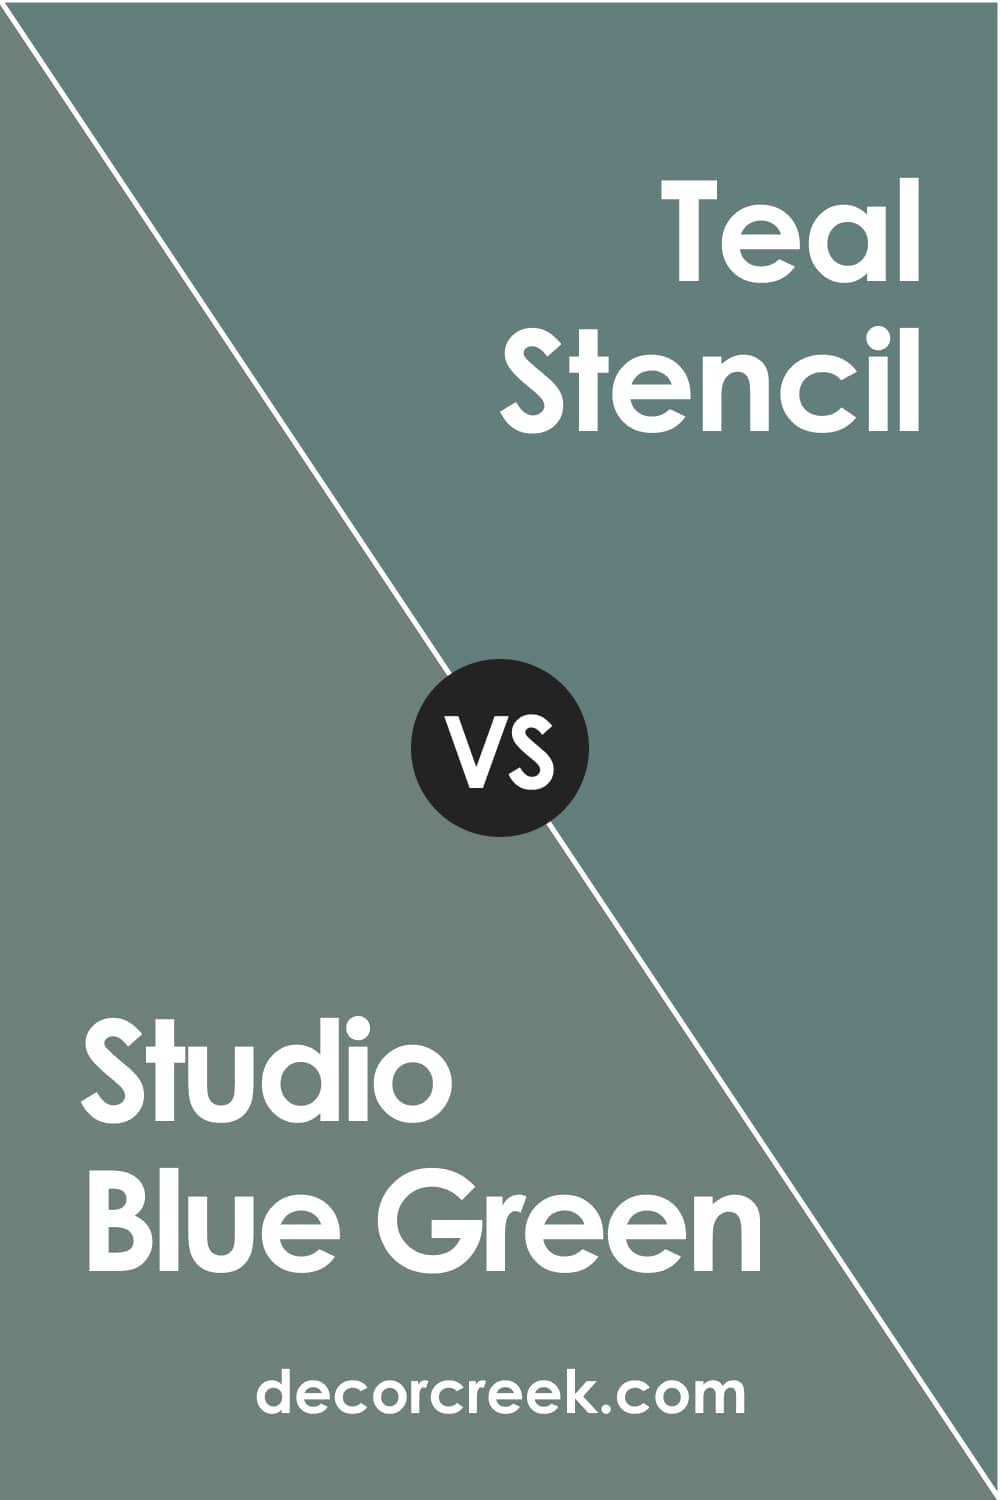 Studio Blue Green vs Teal Stencil